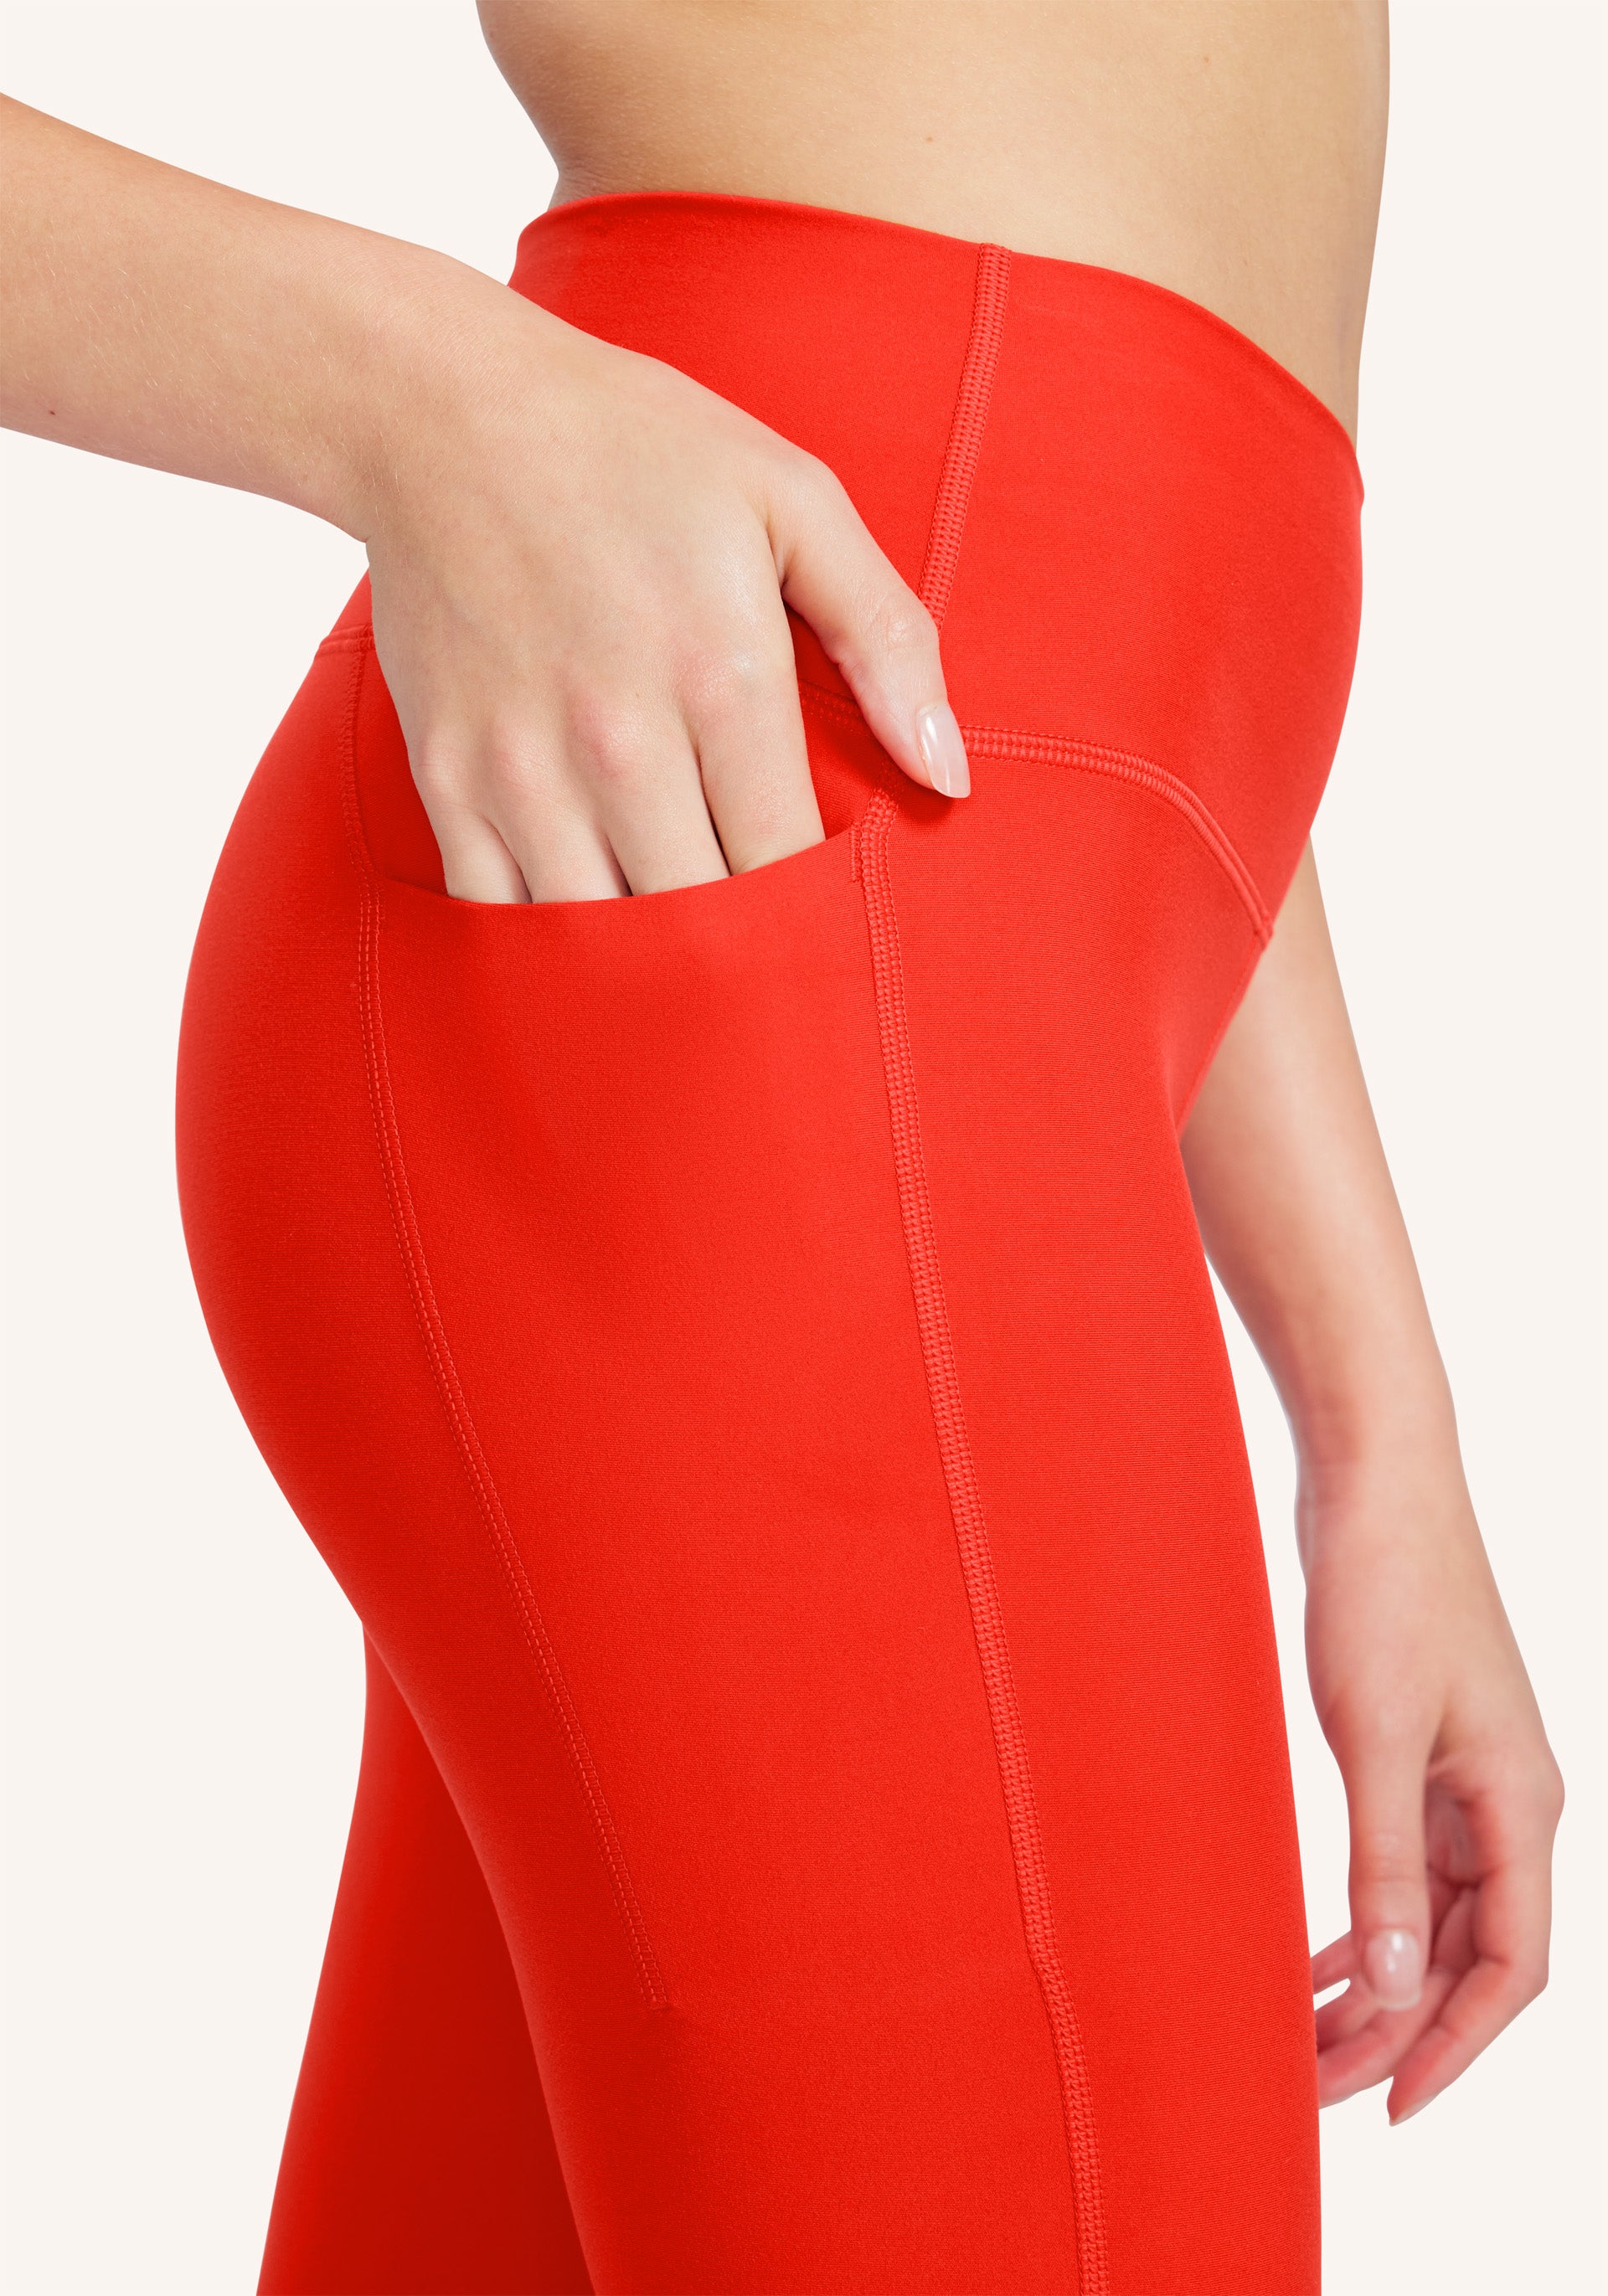 Share more than 152 forever 21 red leggings latest